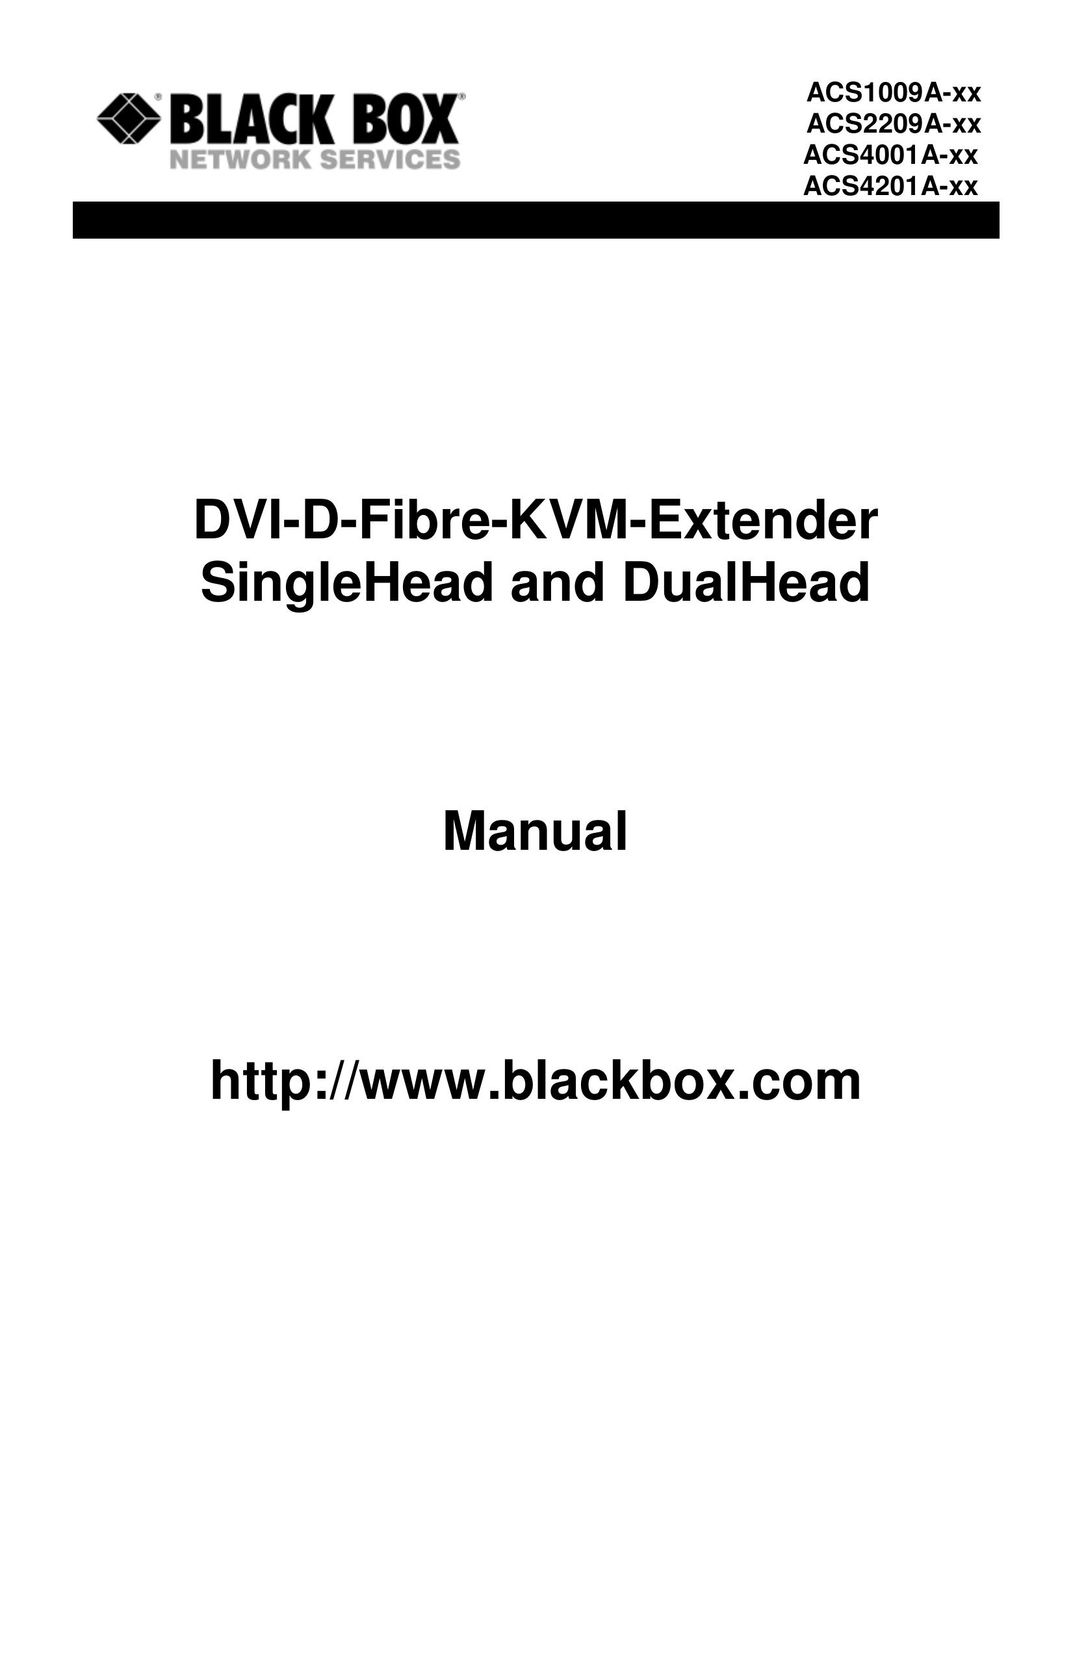 Black Box ACS2209A-xx Network Card User Manual